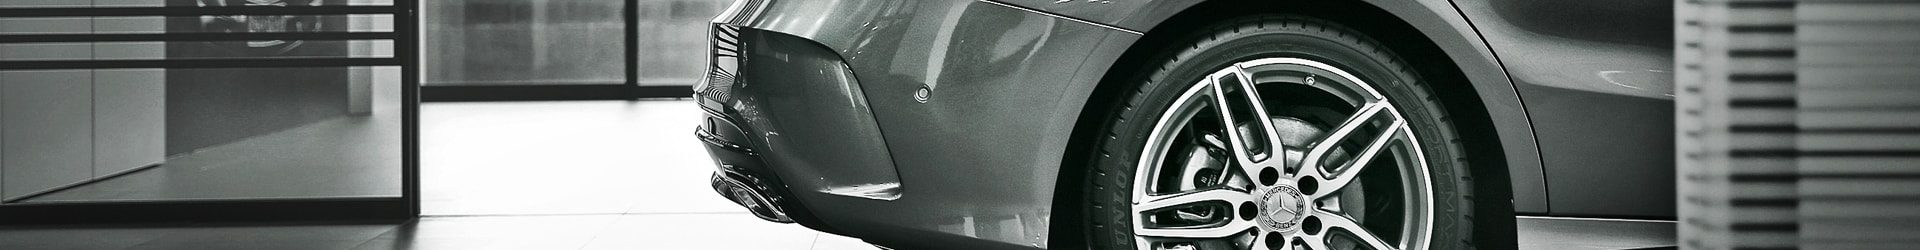 BMW E92 M3 Carbon定風翼加裝 分享